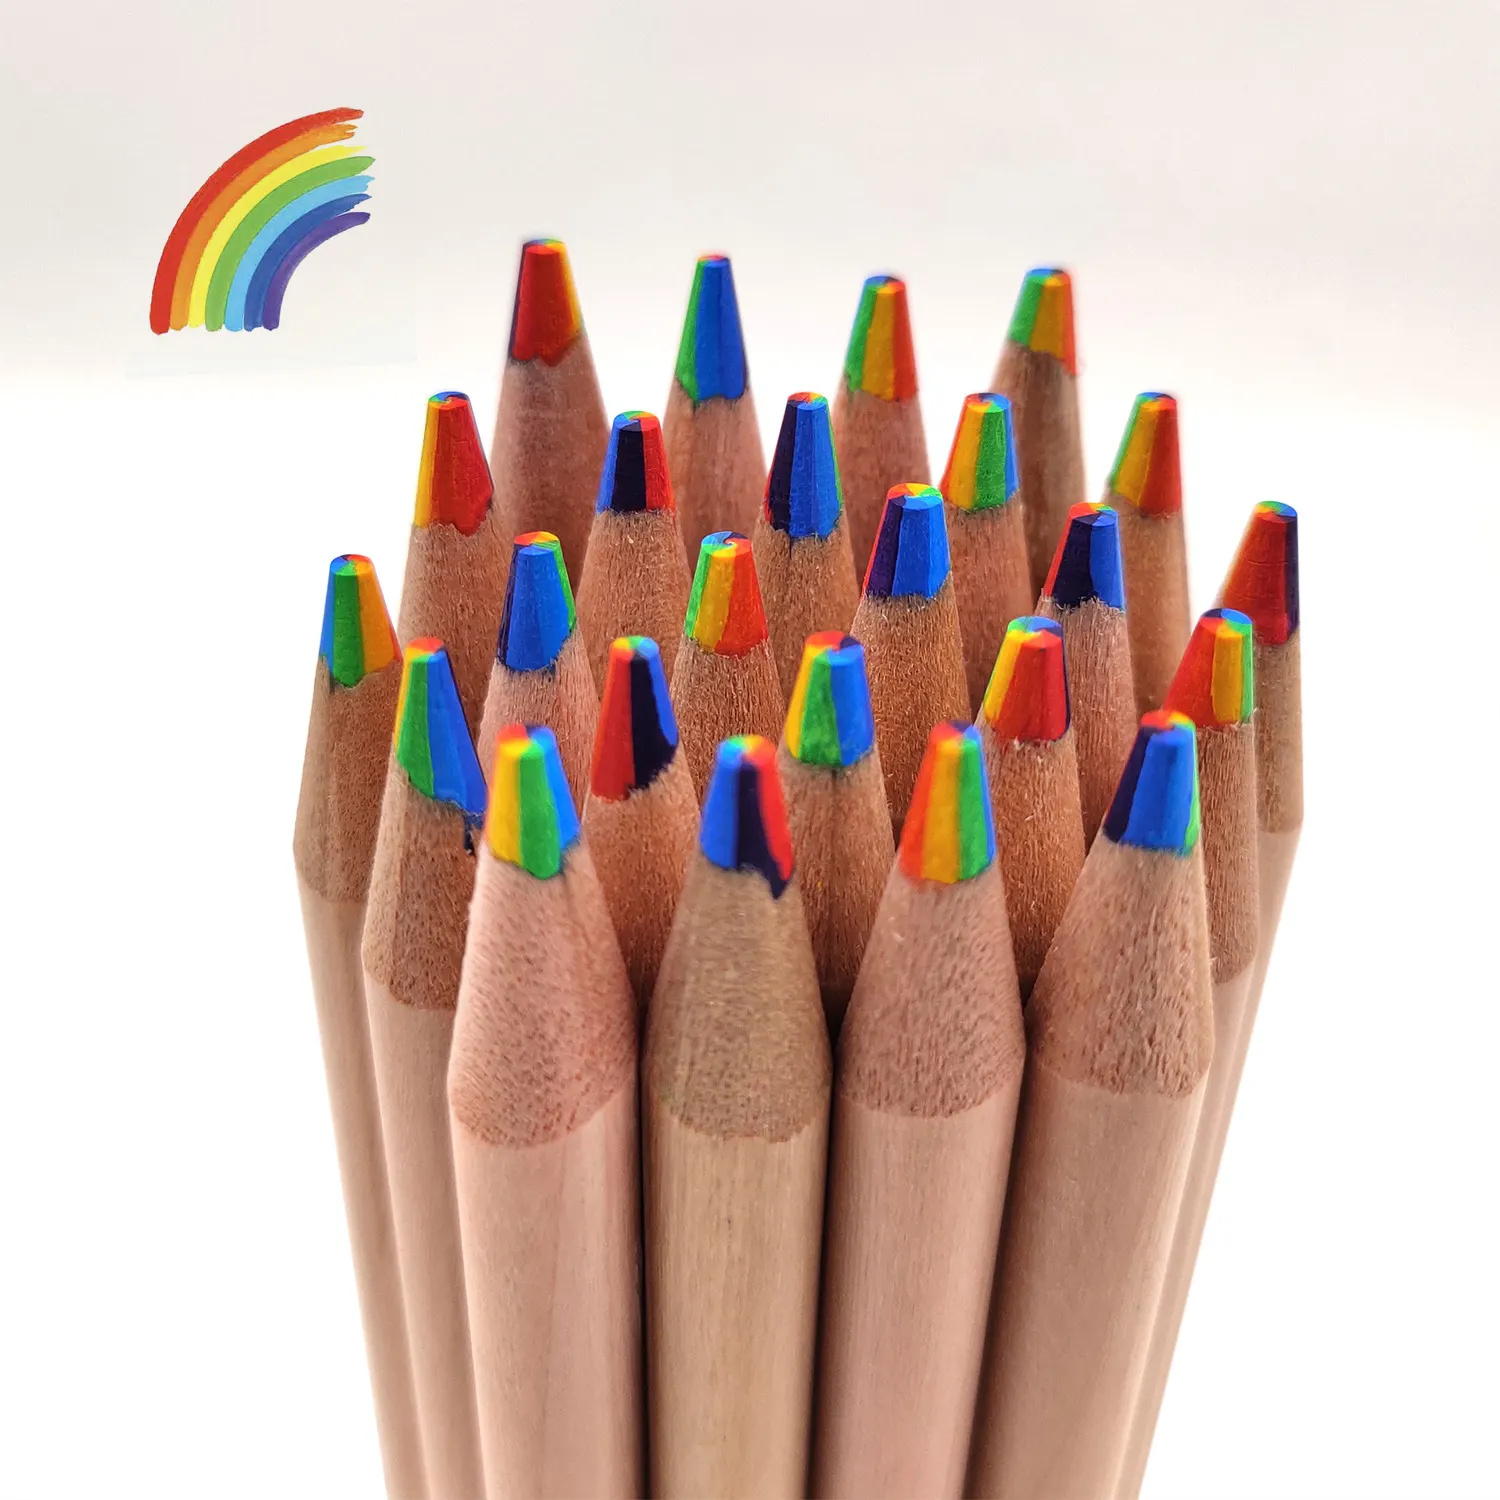 Caneta arco-íris de madeira para desenho, 7 cores, lápis de cor gradiente de madeira preta, DIY, pintura graffiti, cores criativas, chumbo, atacado